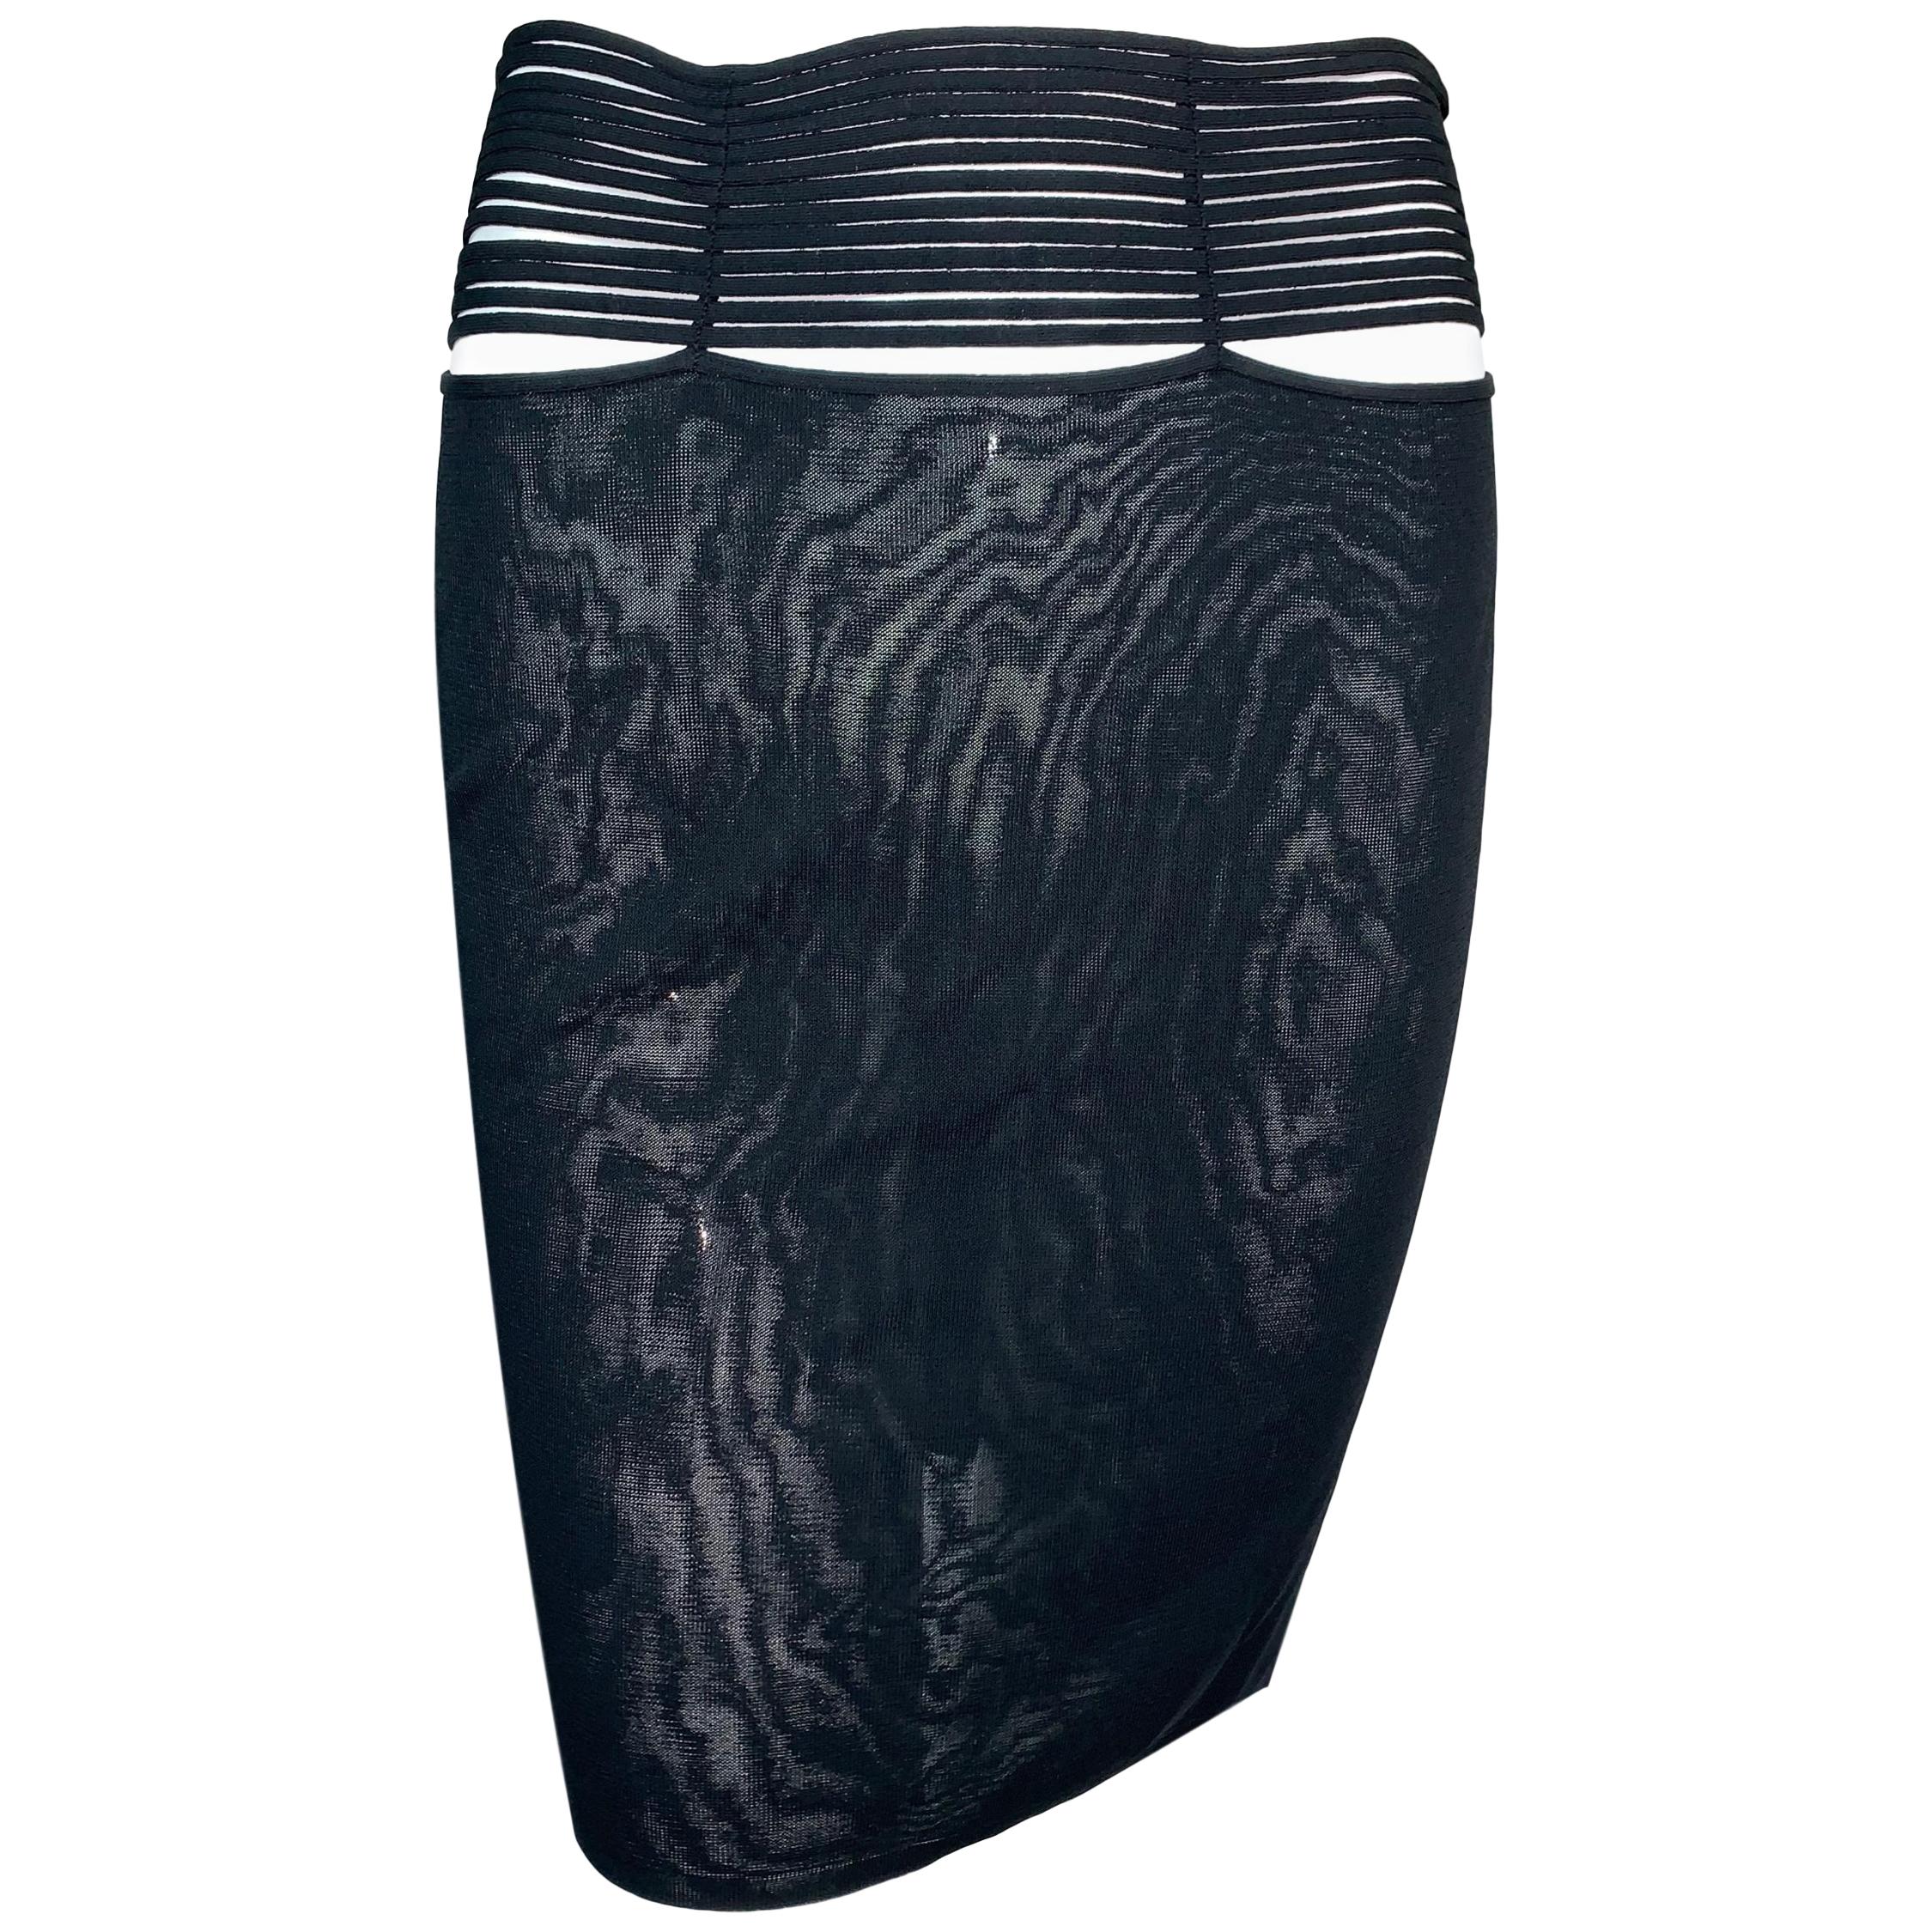 C. 2001 Gucci Tom Ford Sheer Black Knit Mini Skirt M